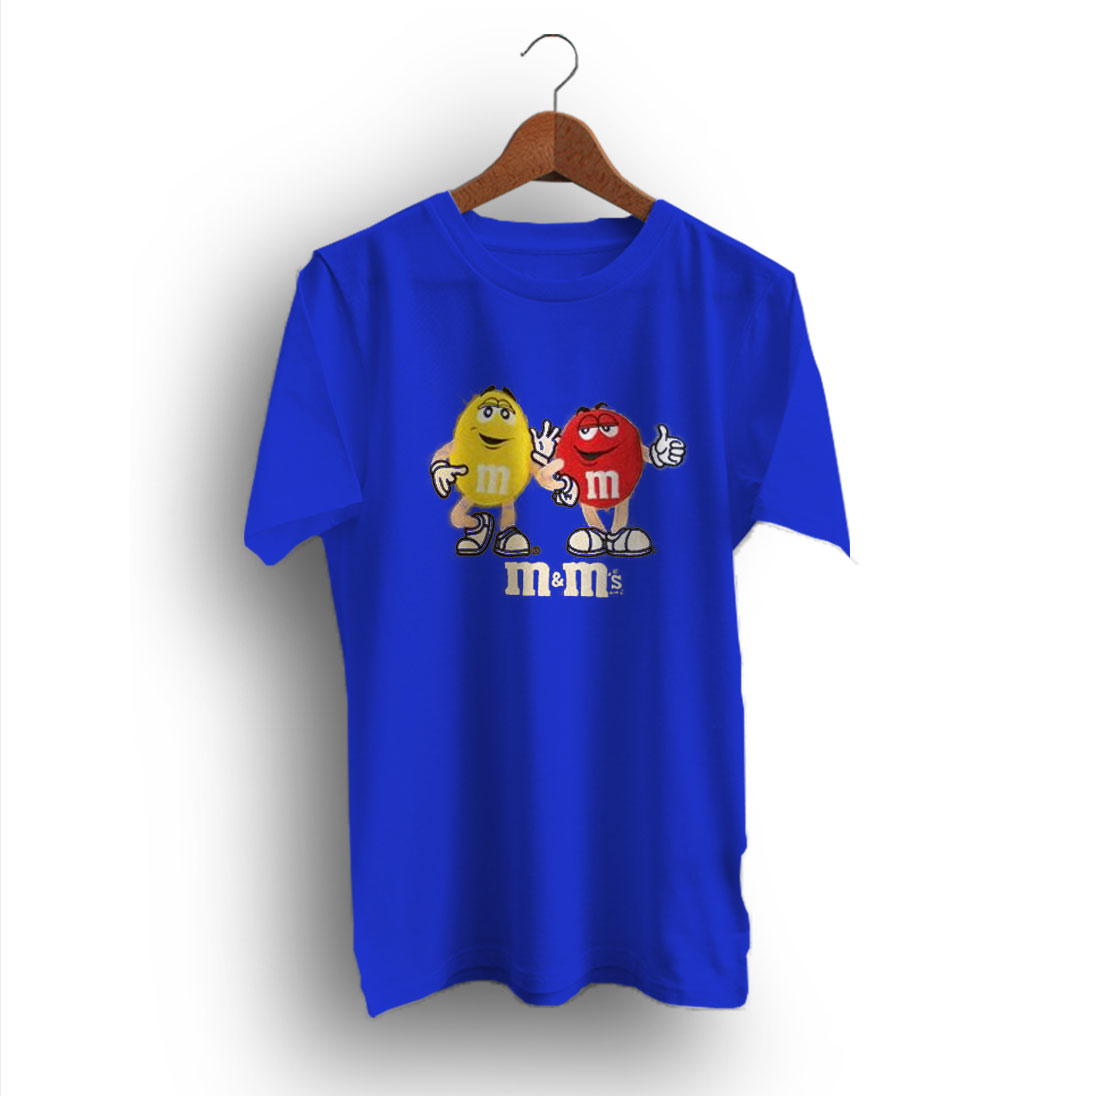 Custom T-Shirts for M&M's =) - Shirt Design Ideas